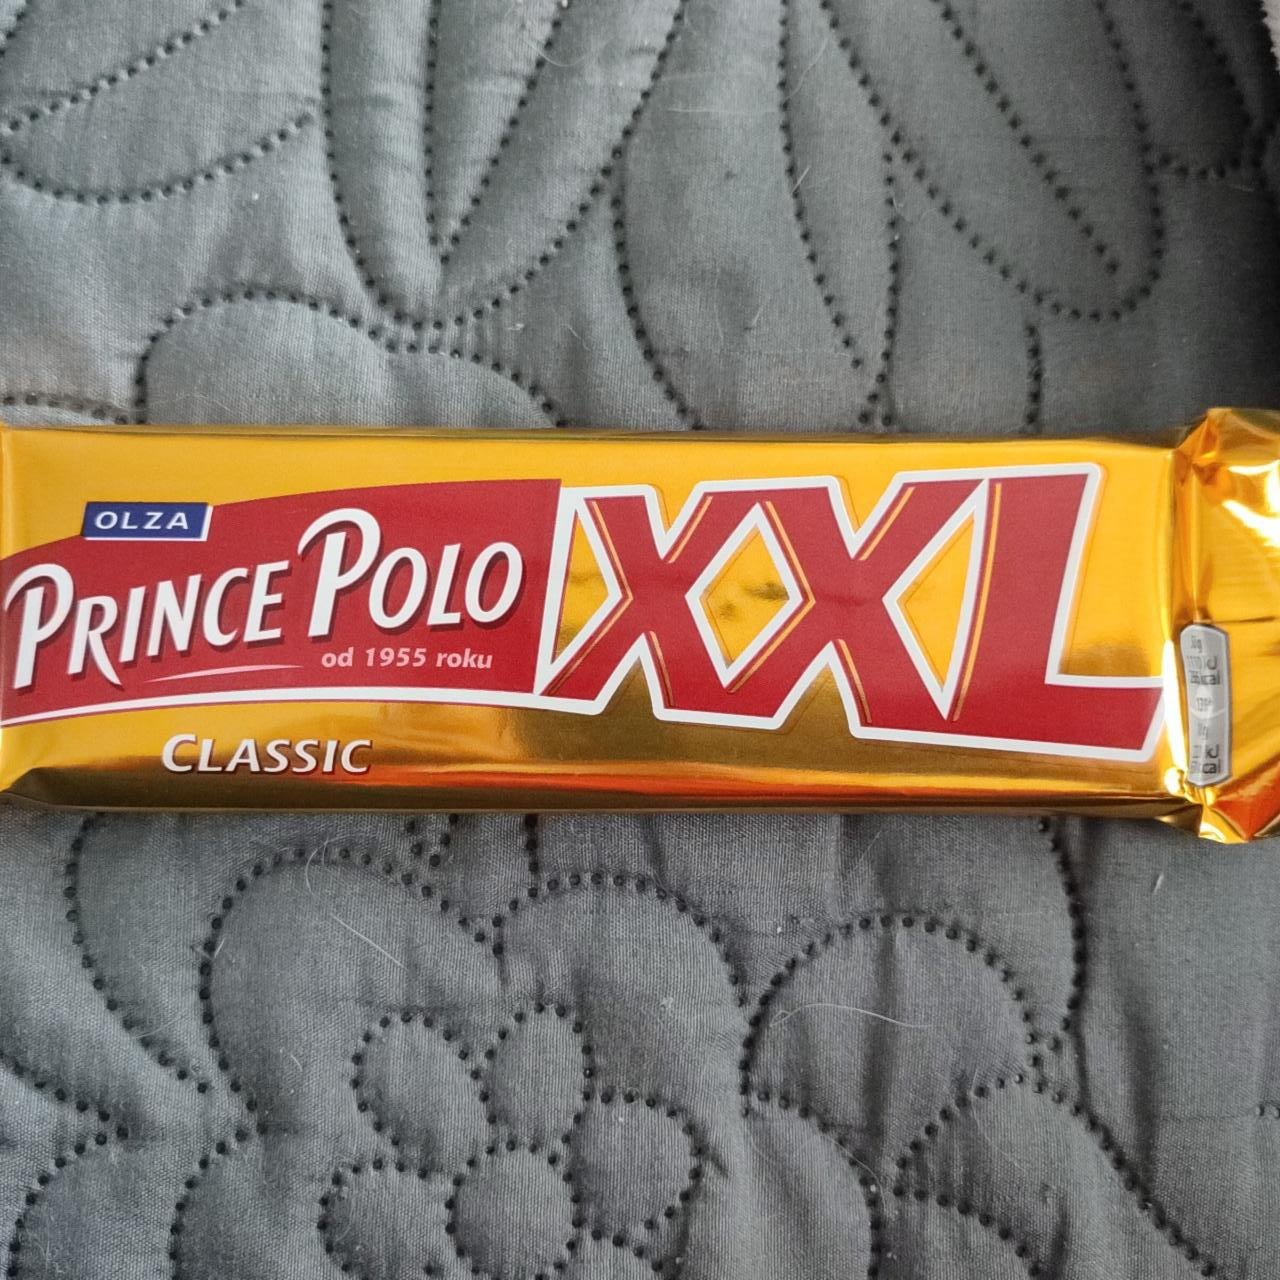 Фото - Prince Polo XXL Classic Olza